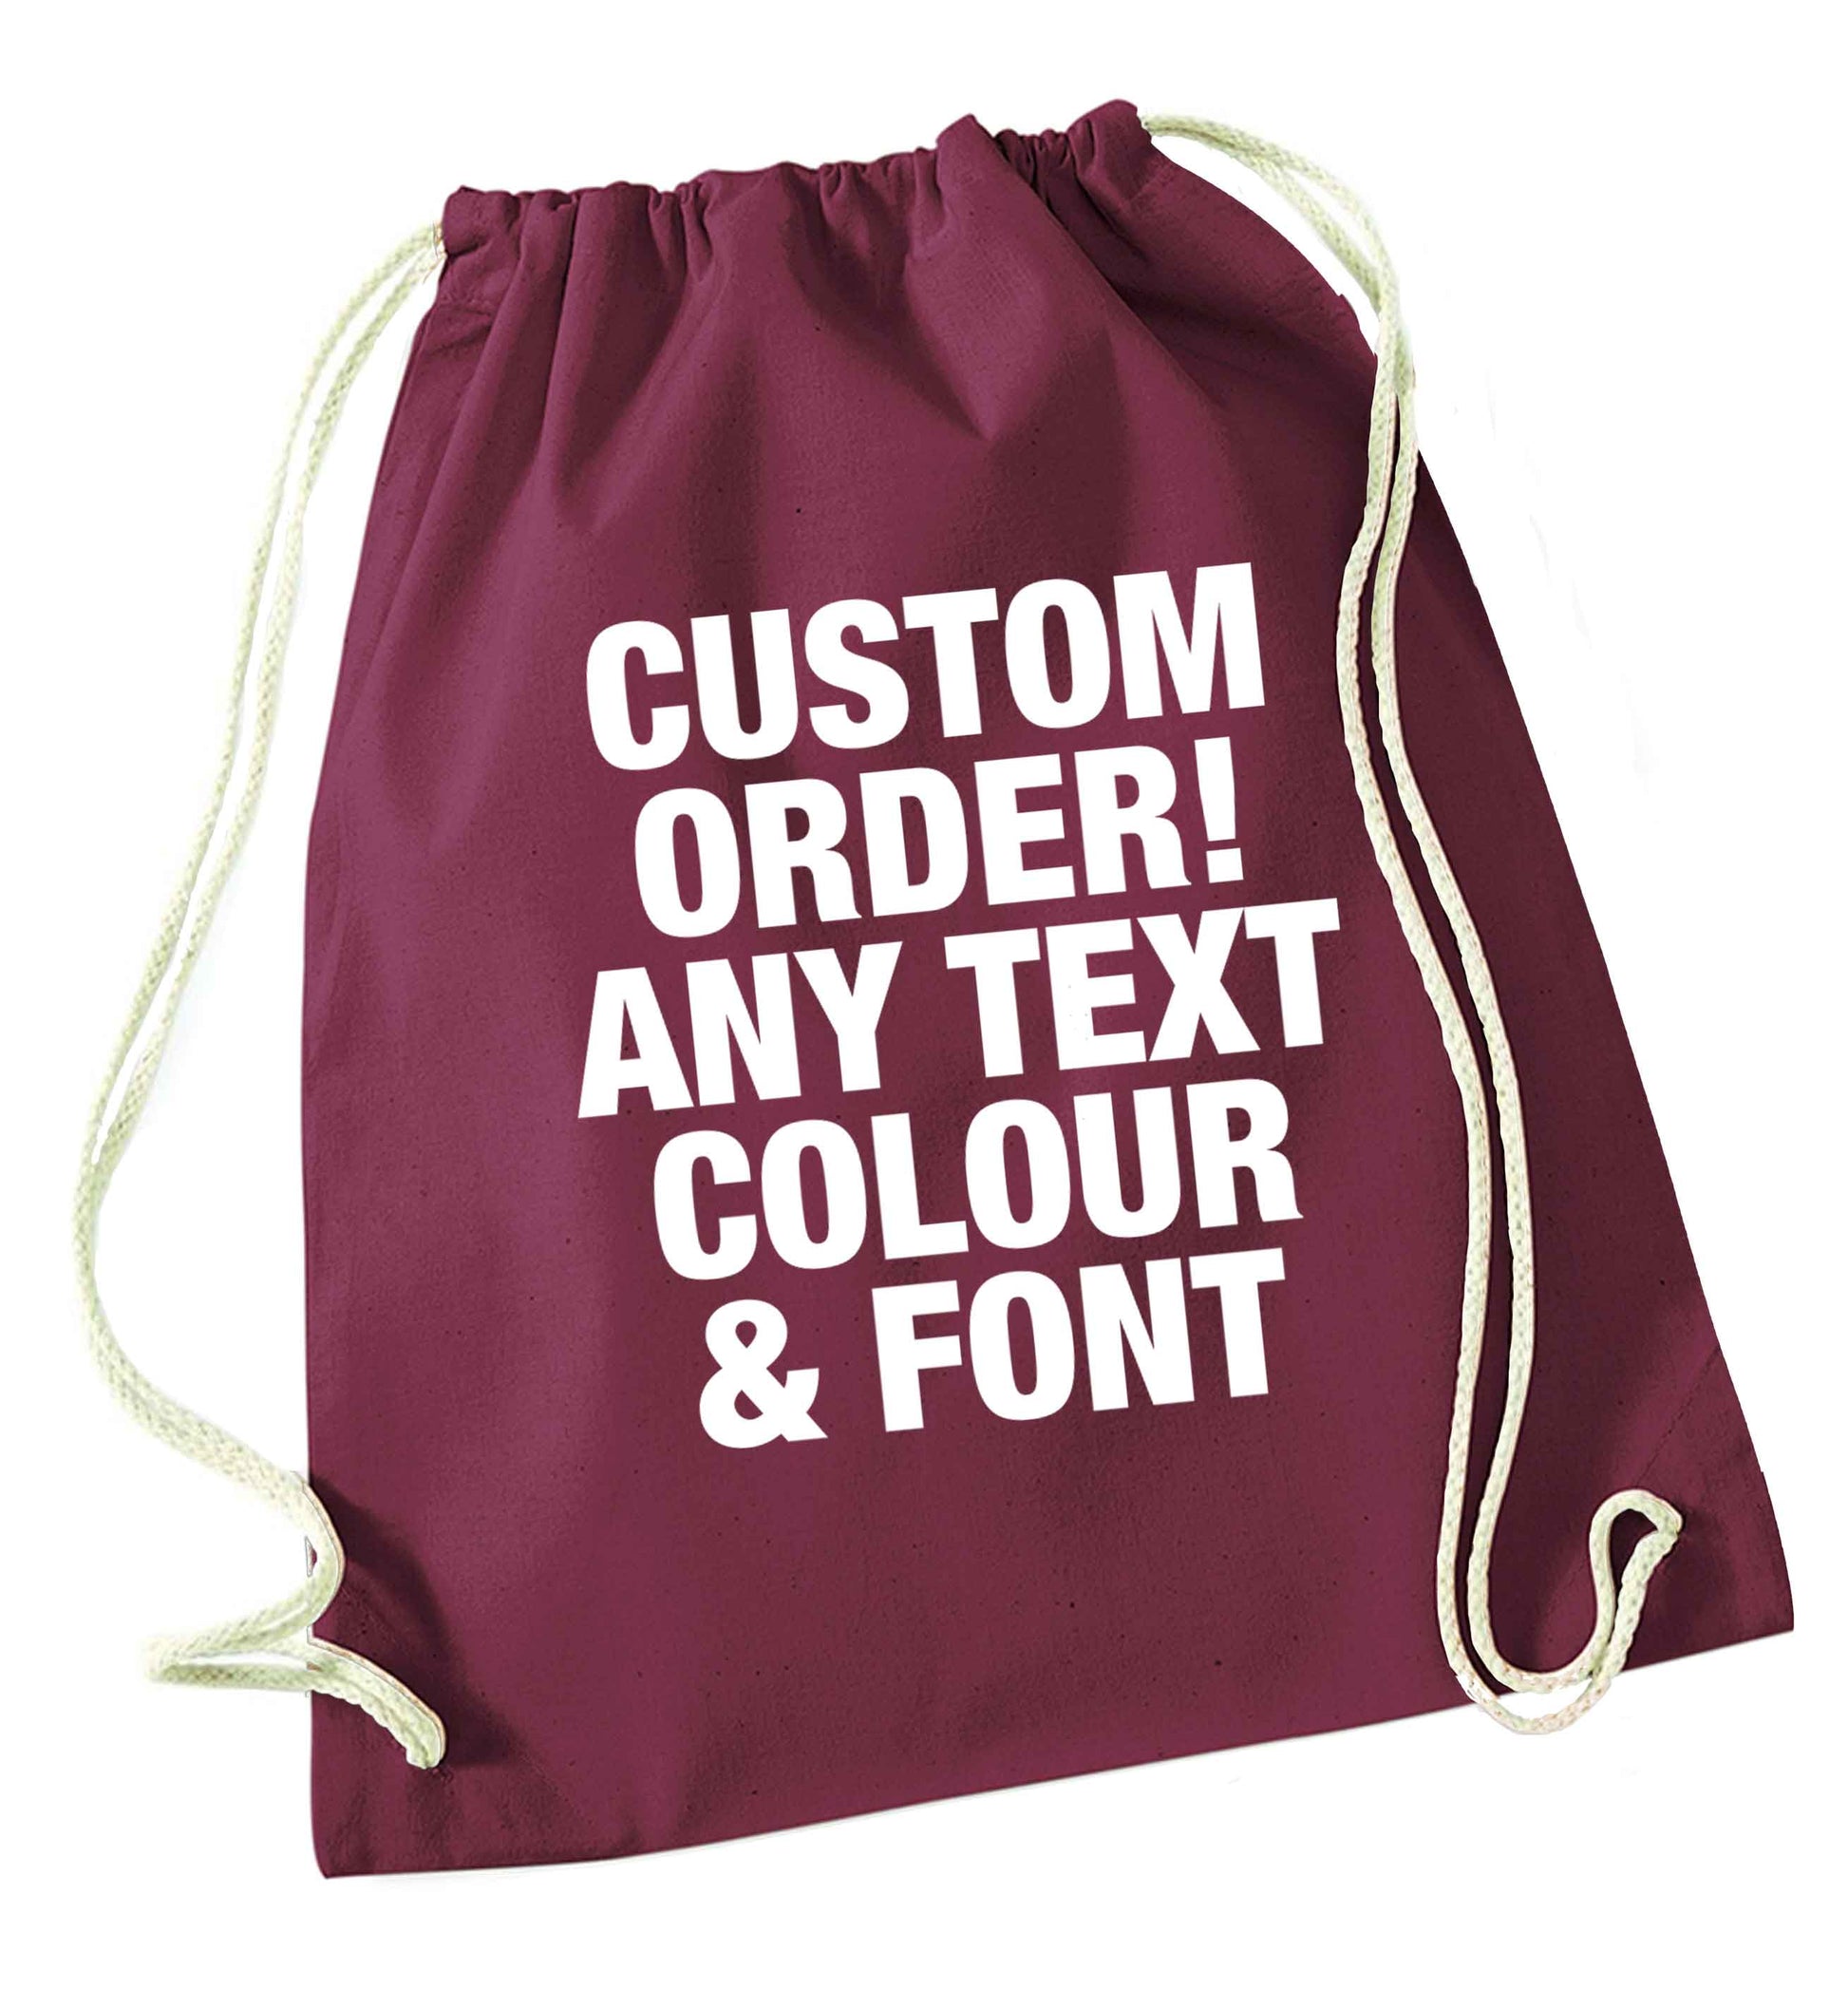 Custom order any text colour and font maroon drawstring bag